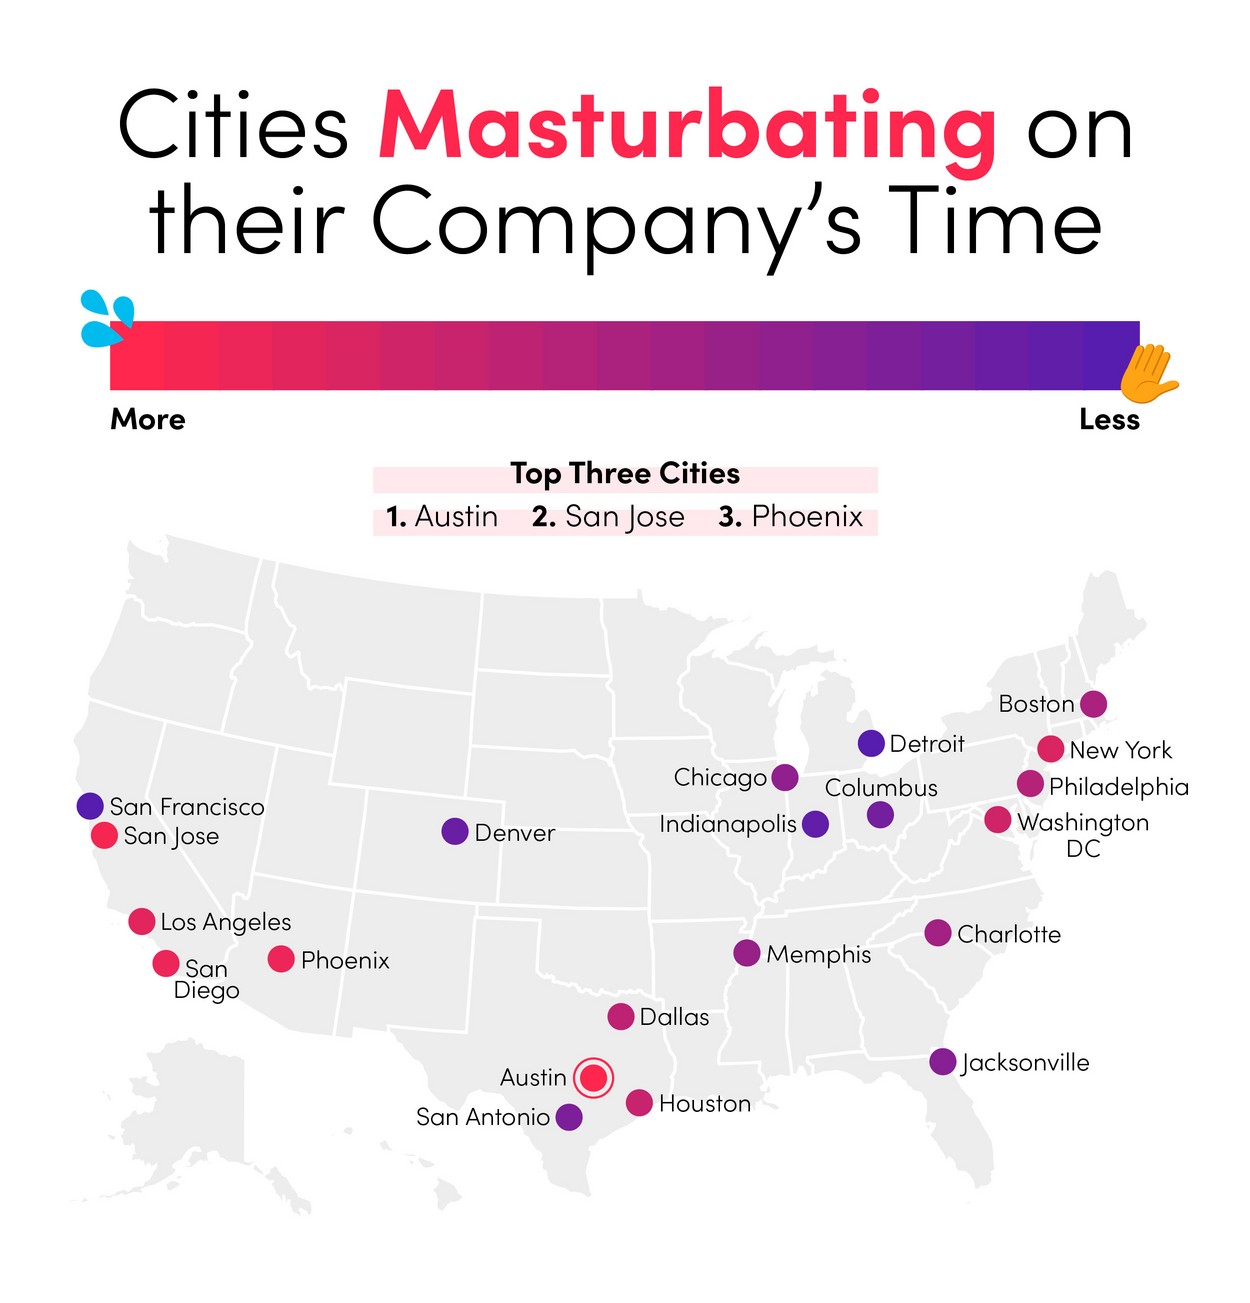 American masturbation habits